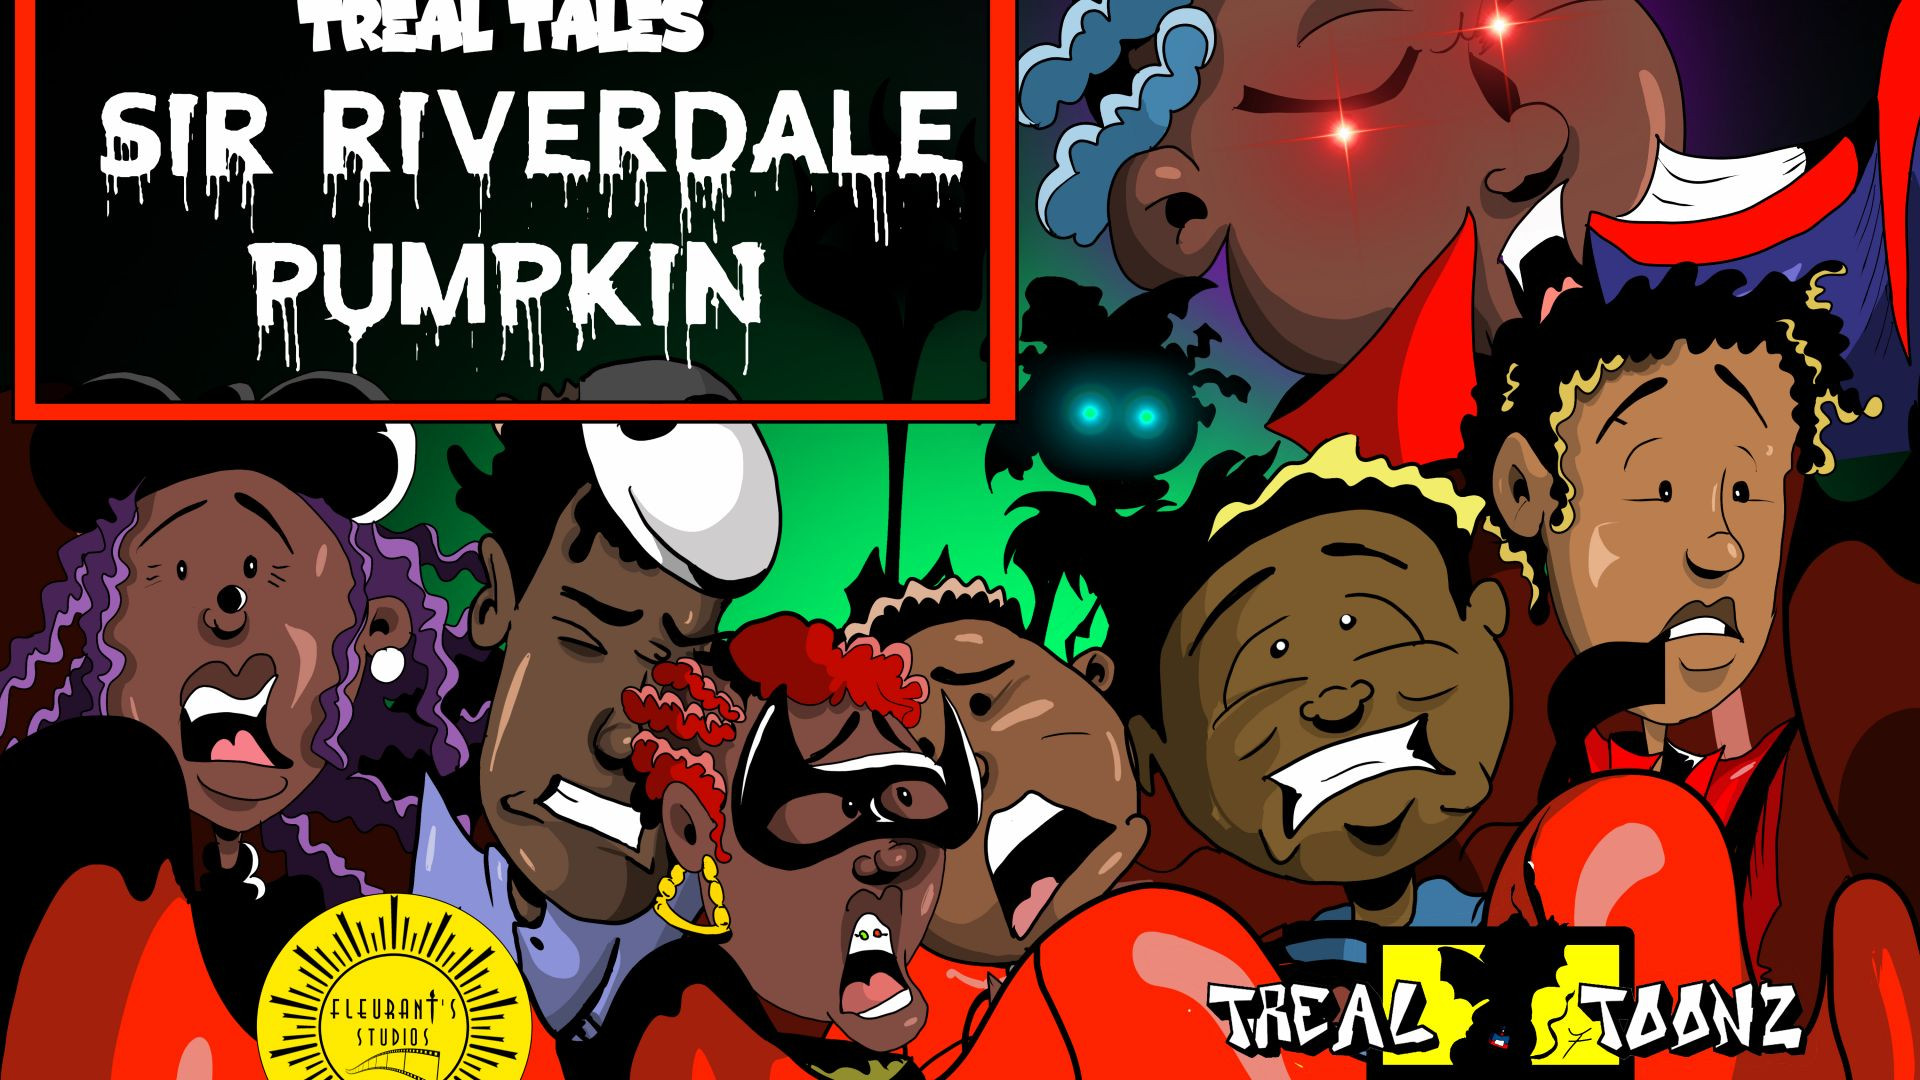 TREAL TALES: Sir Riverdale Pumpkin!!!